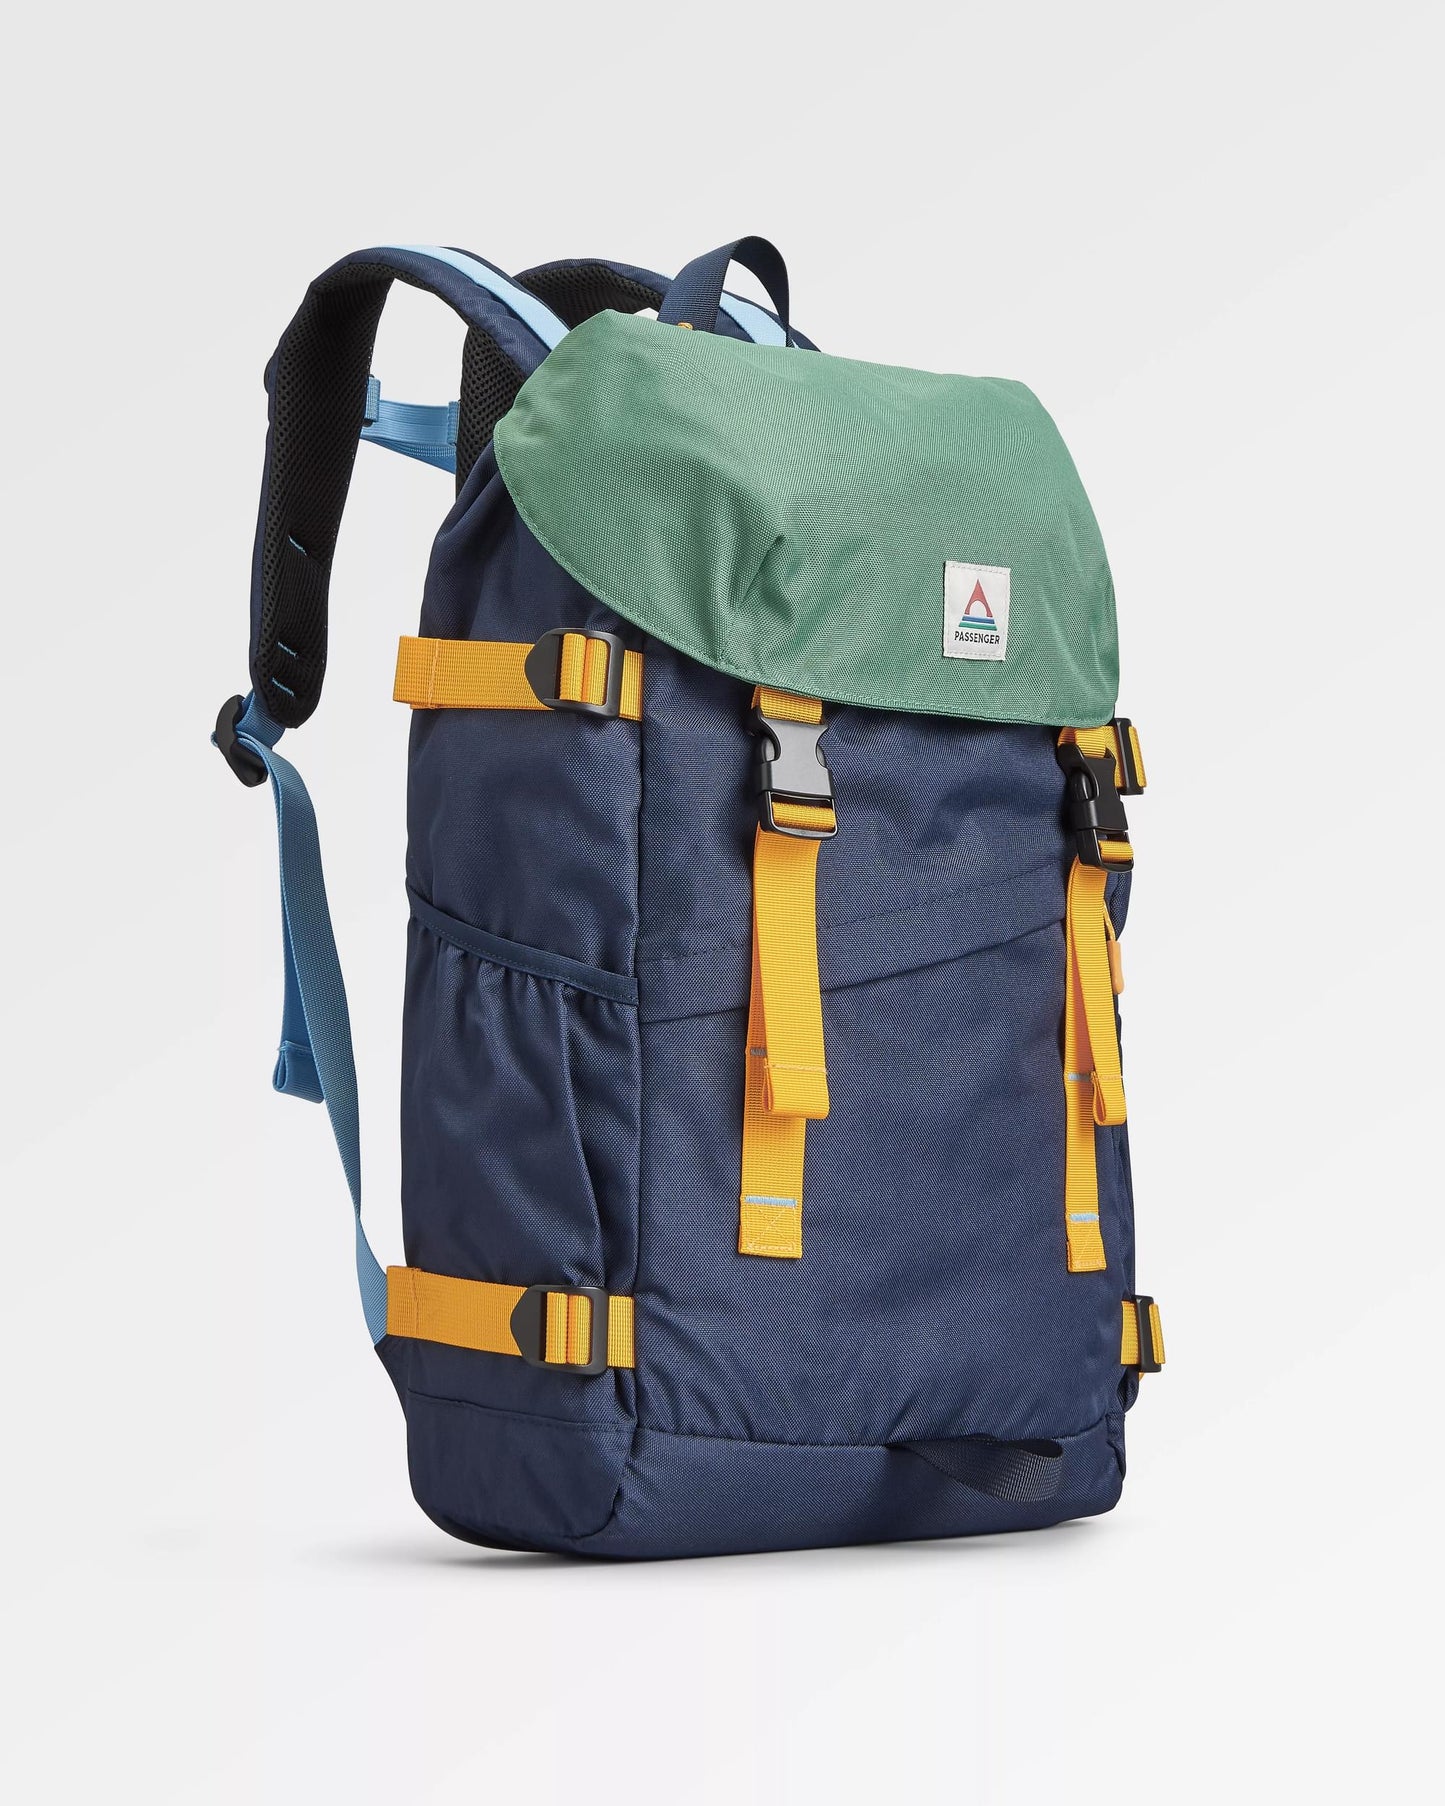 Boondocker Recycled 26L Backpack - Navy/ Laurel Green